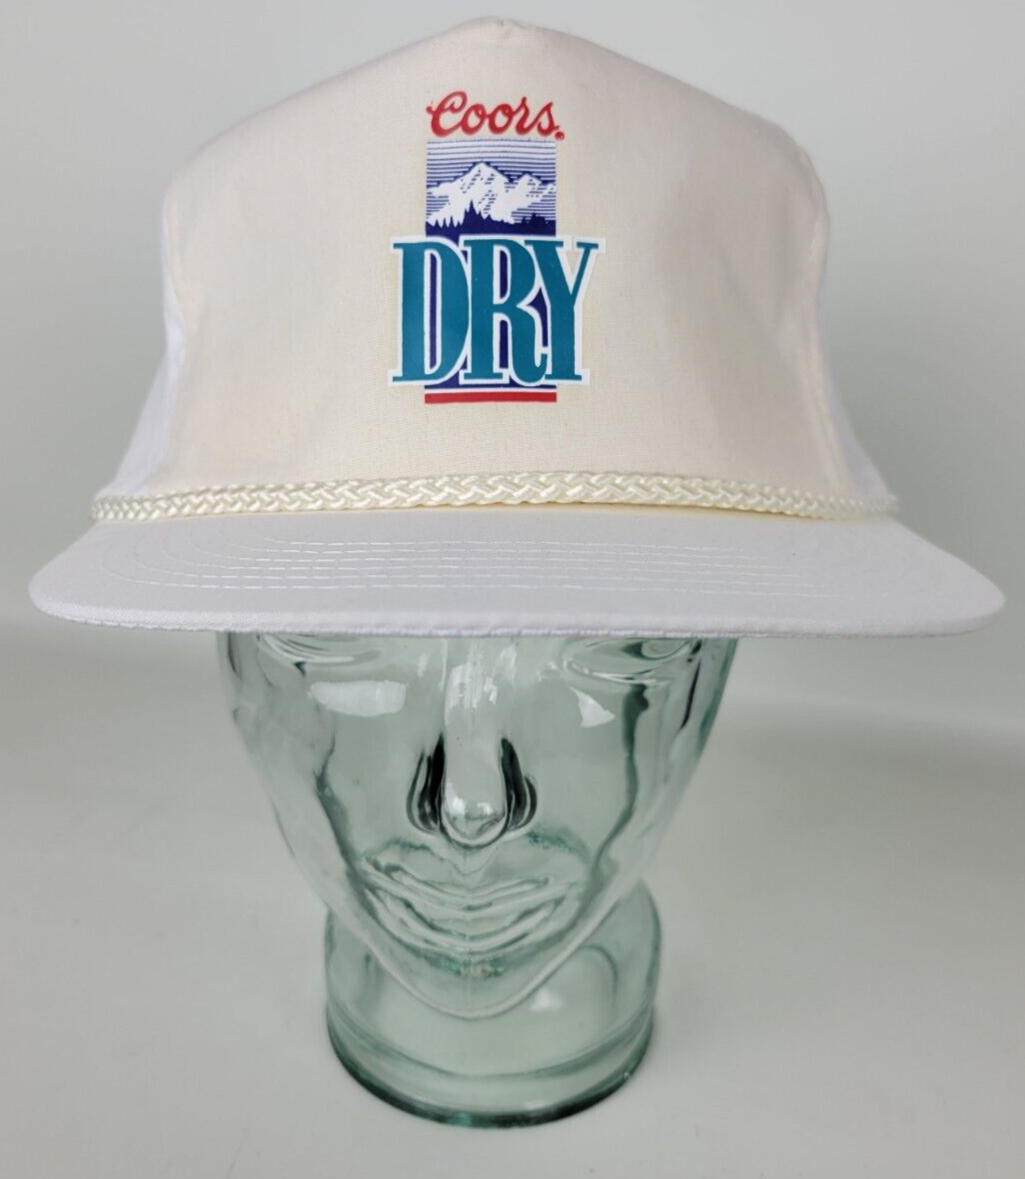 Primary image for Vintage Coors Dry Adjustable Hat White Off White Designer Award